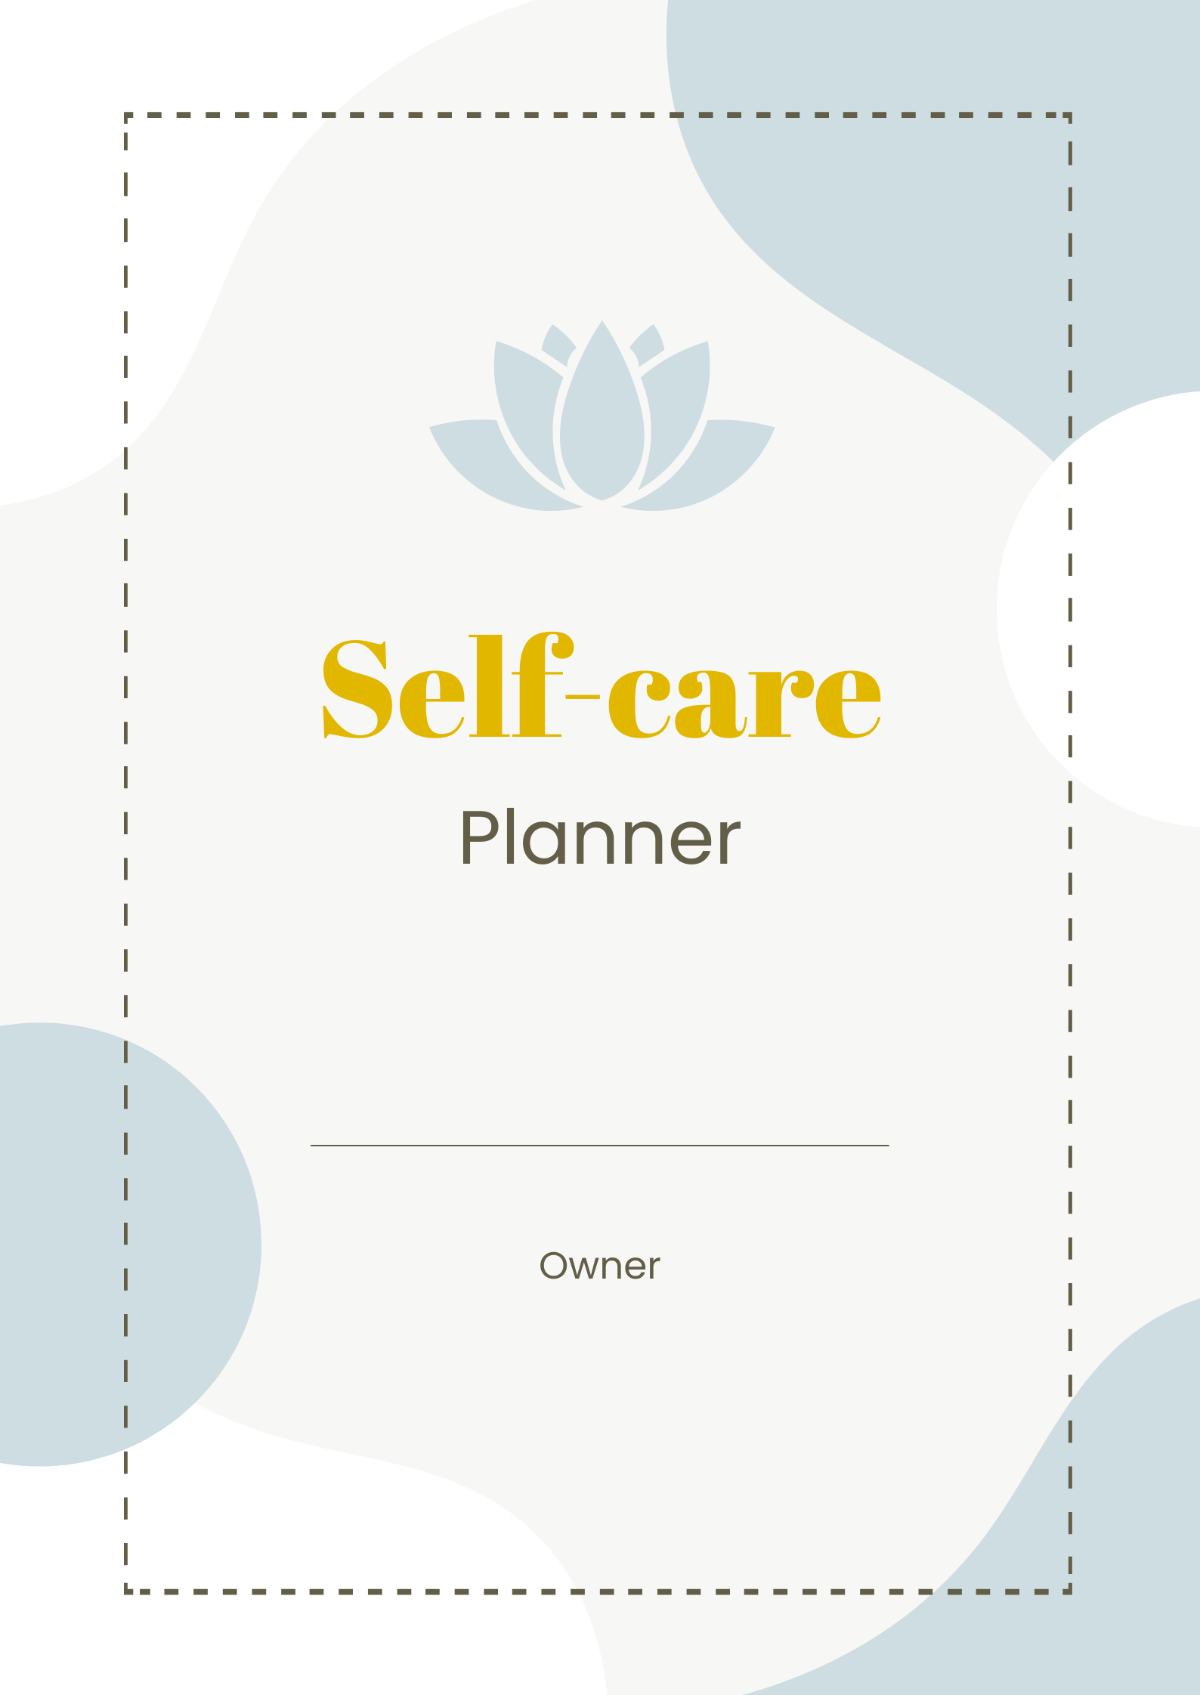 Editable Self Care Planner Template